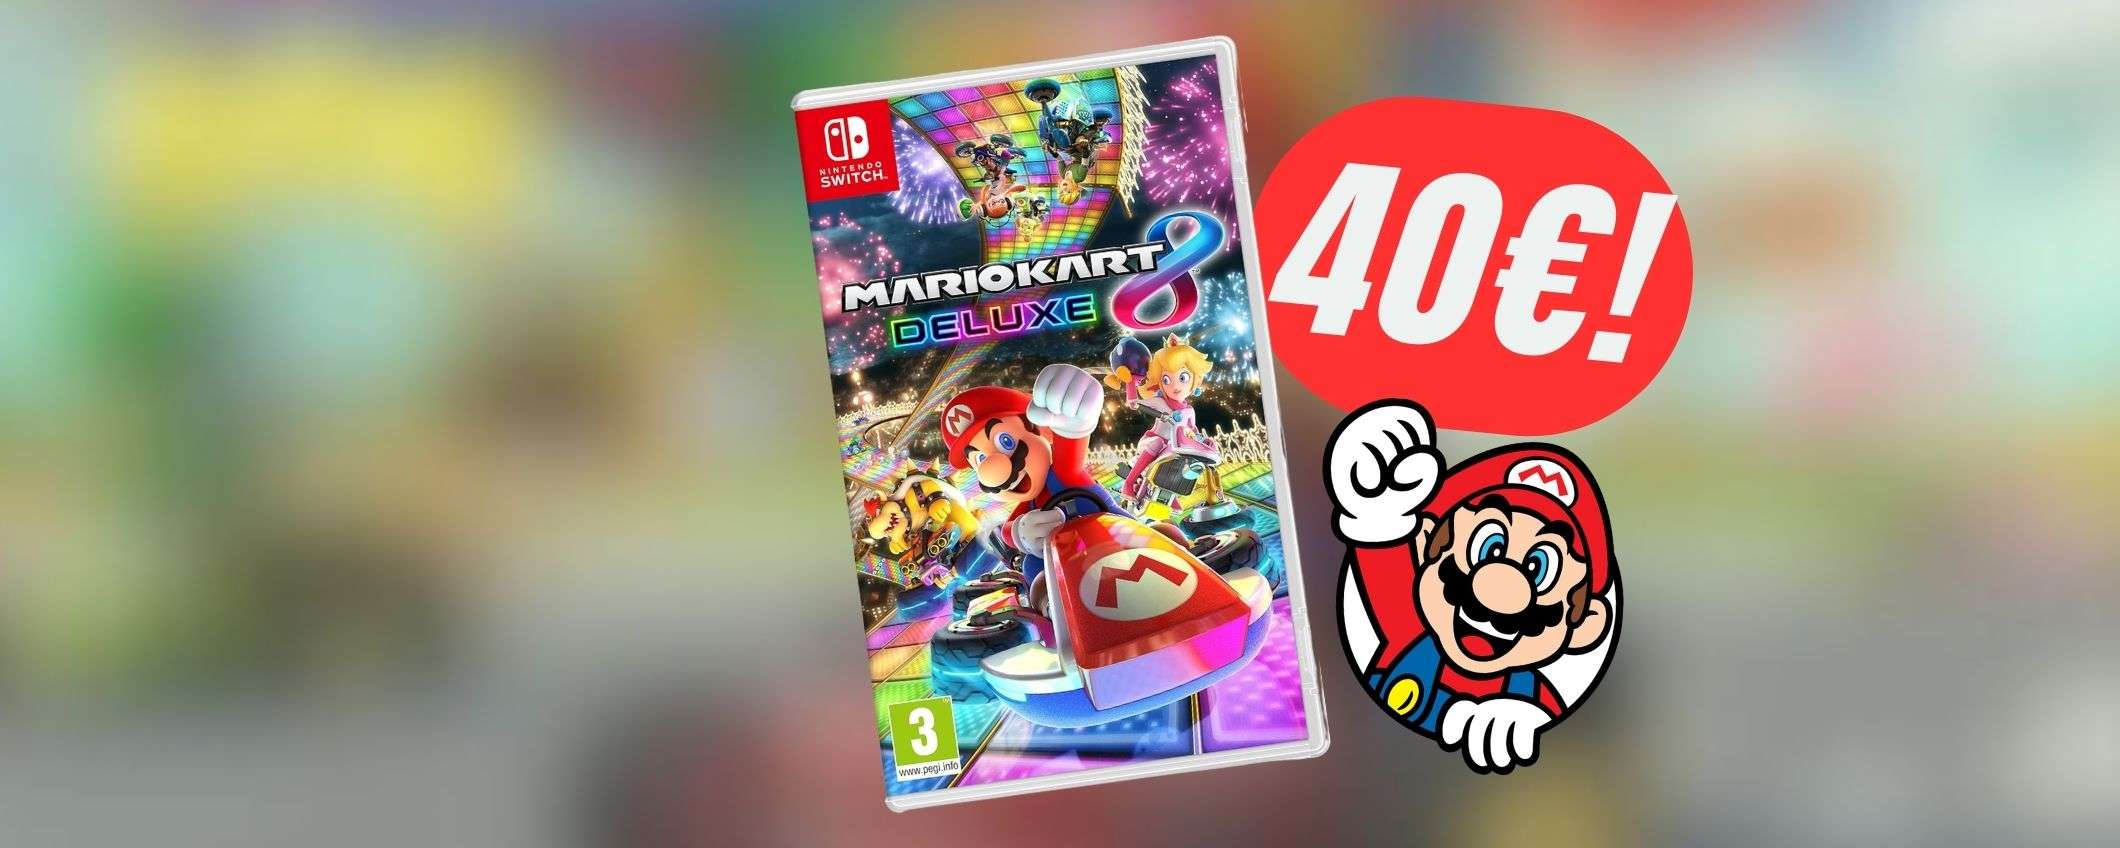 Mario Kart 8 Deluxe CROLLA a soli 40€!